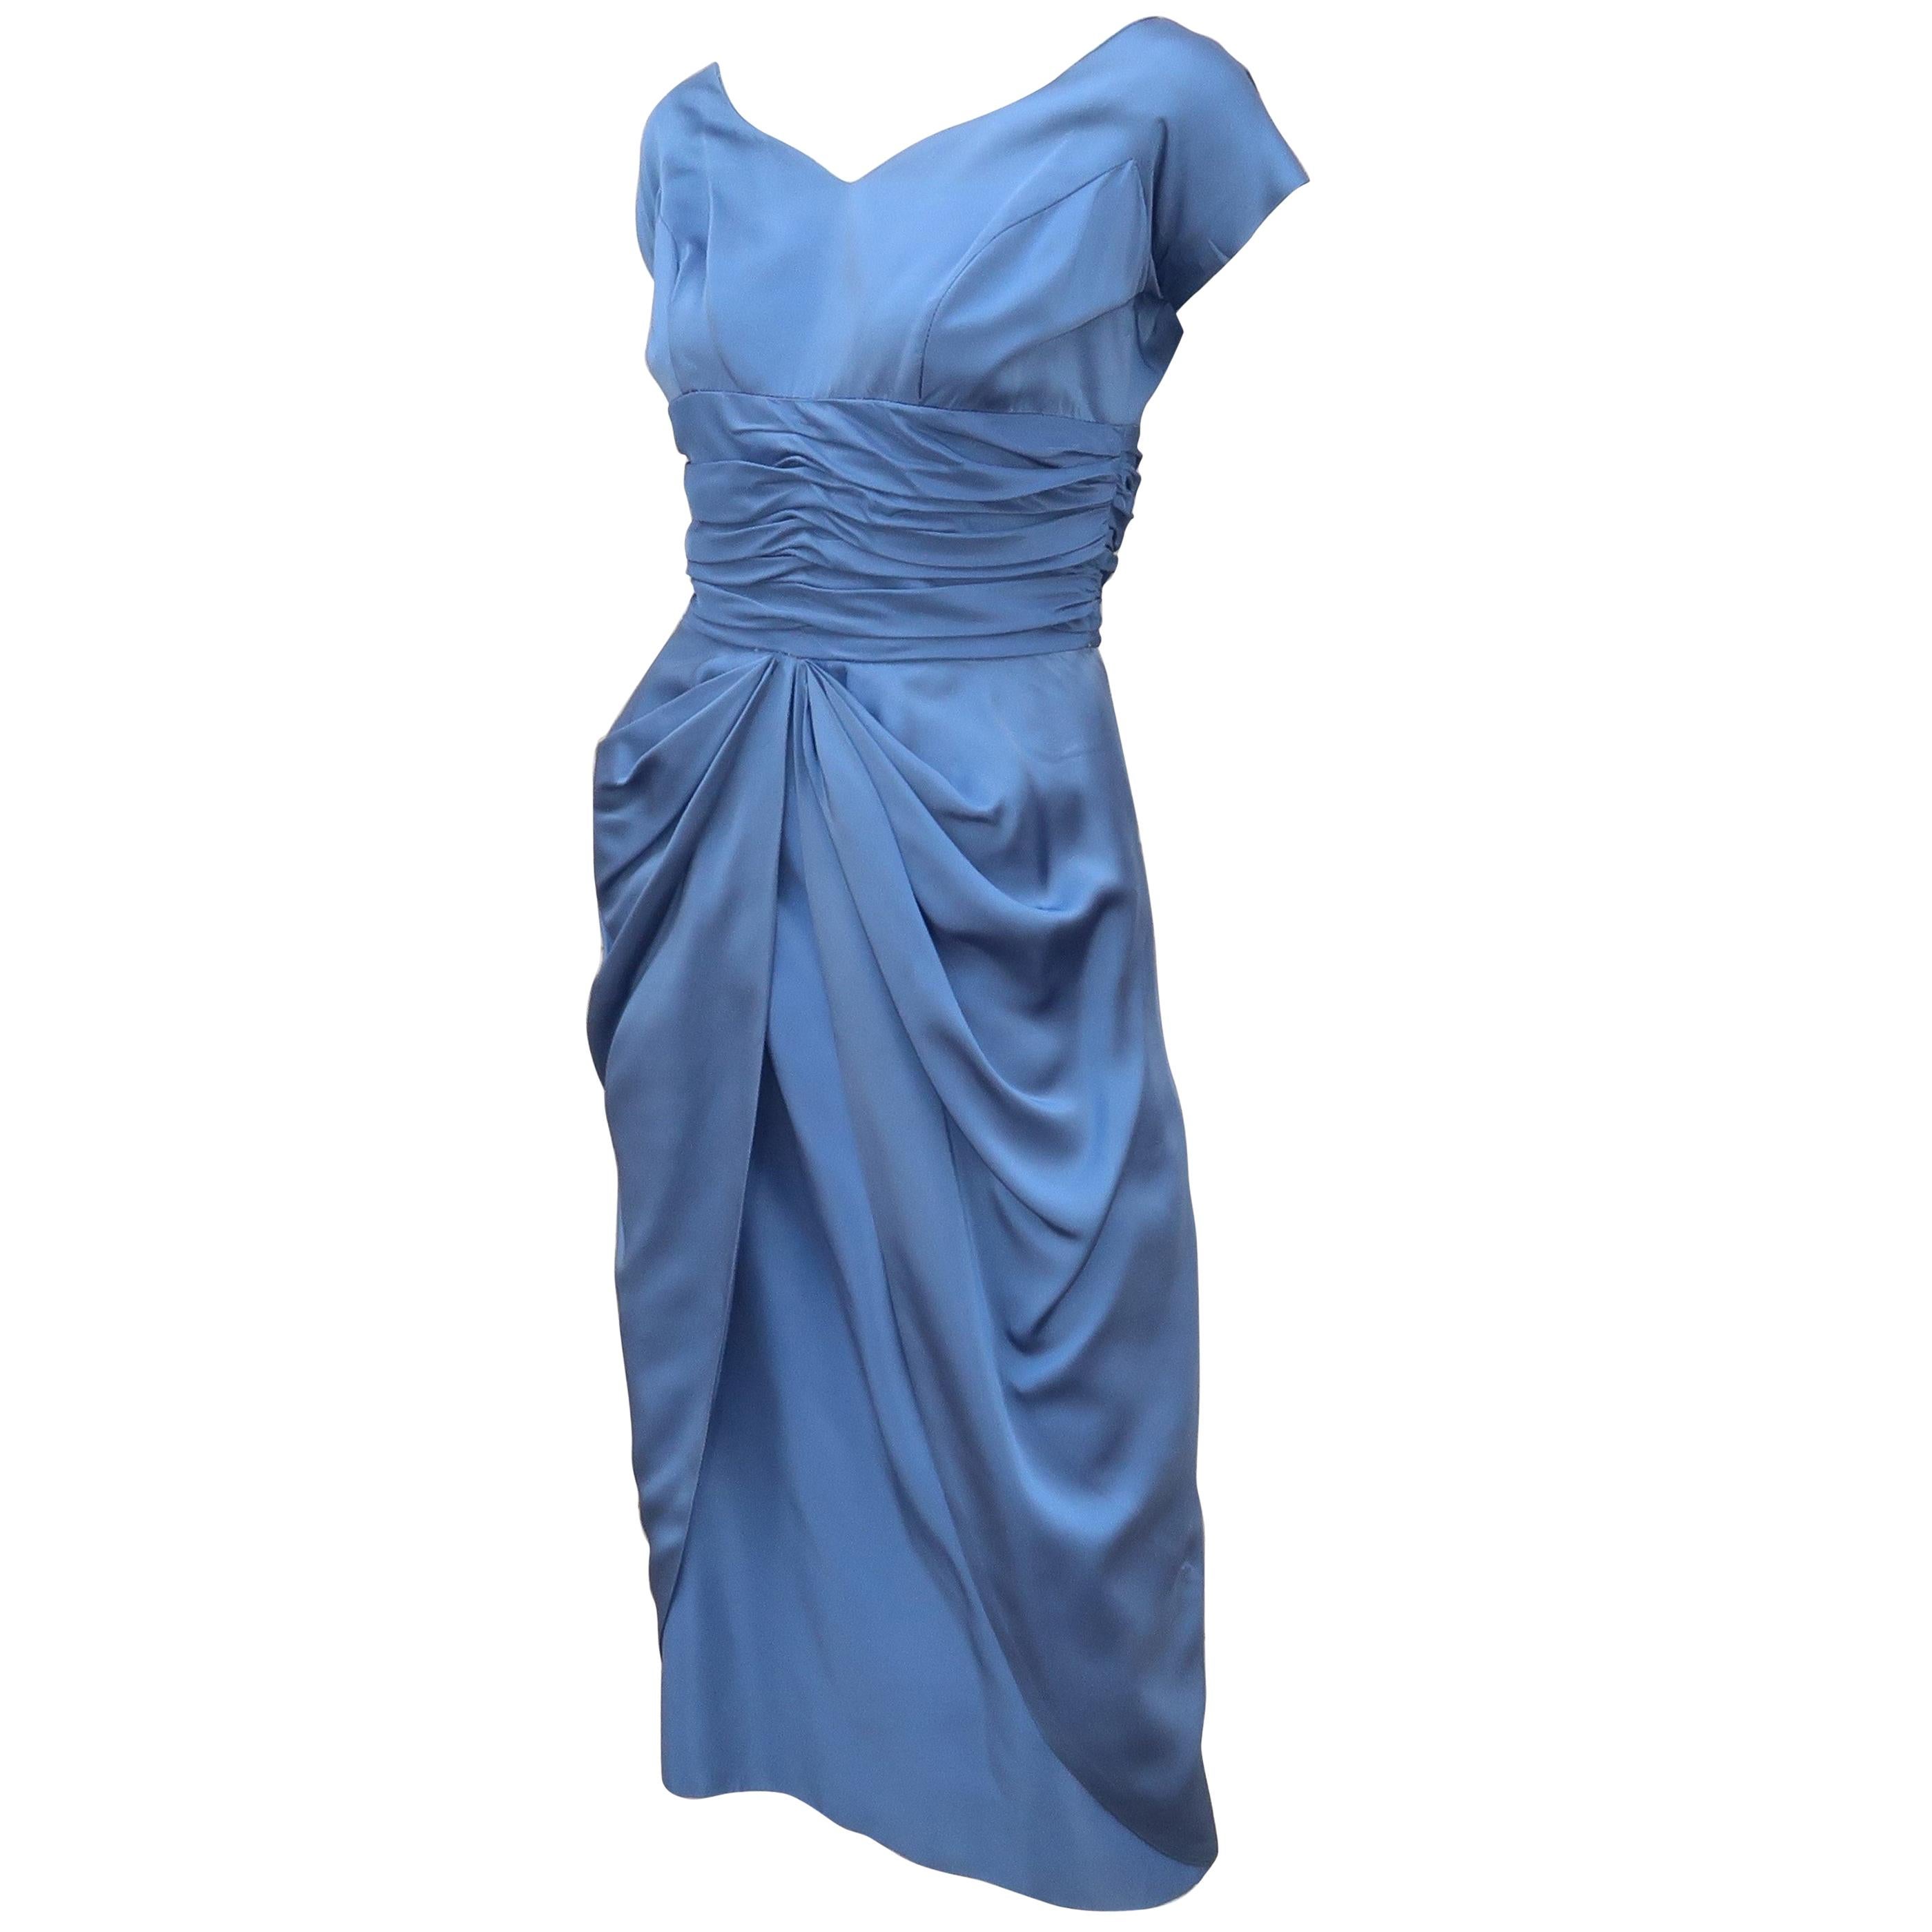 Emma Domb 1950's Periwinkle Blue Satin Cocktail Dress